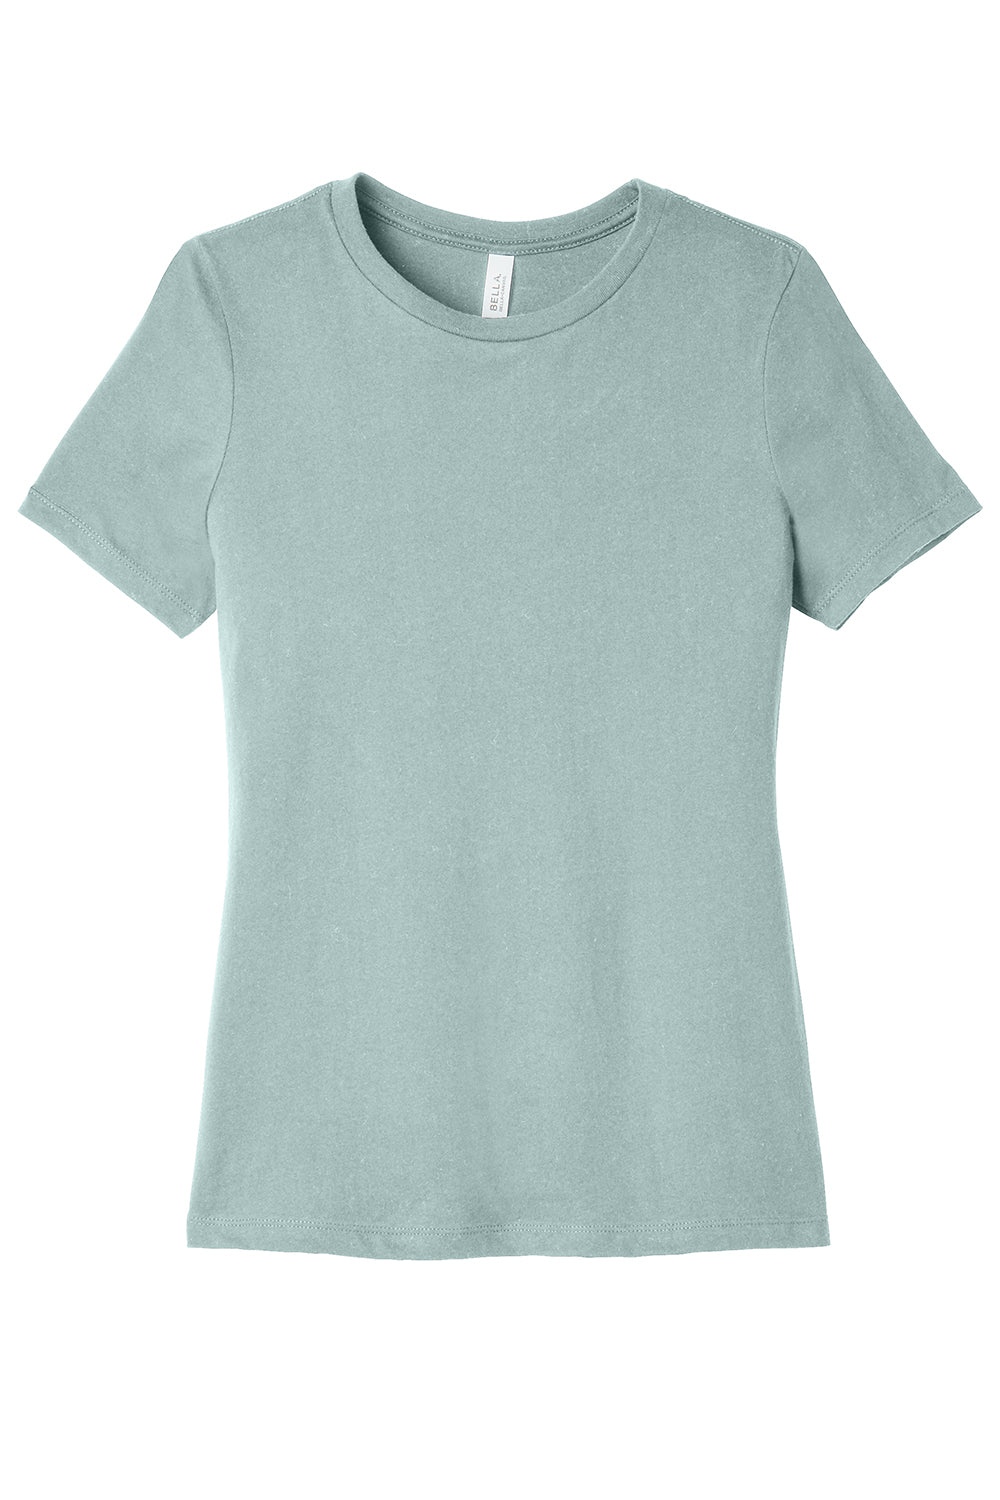 Bella + Canvas BC6413 Womens Short Sleeve Crewneck T-Shirt Dusty Blue Flat Front